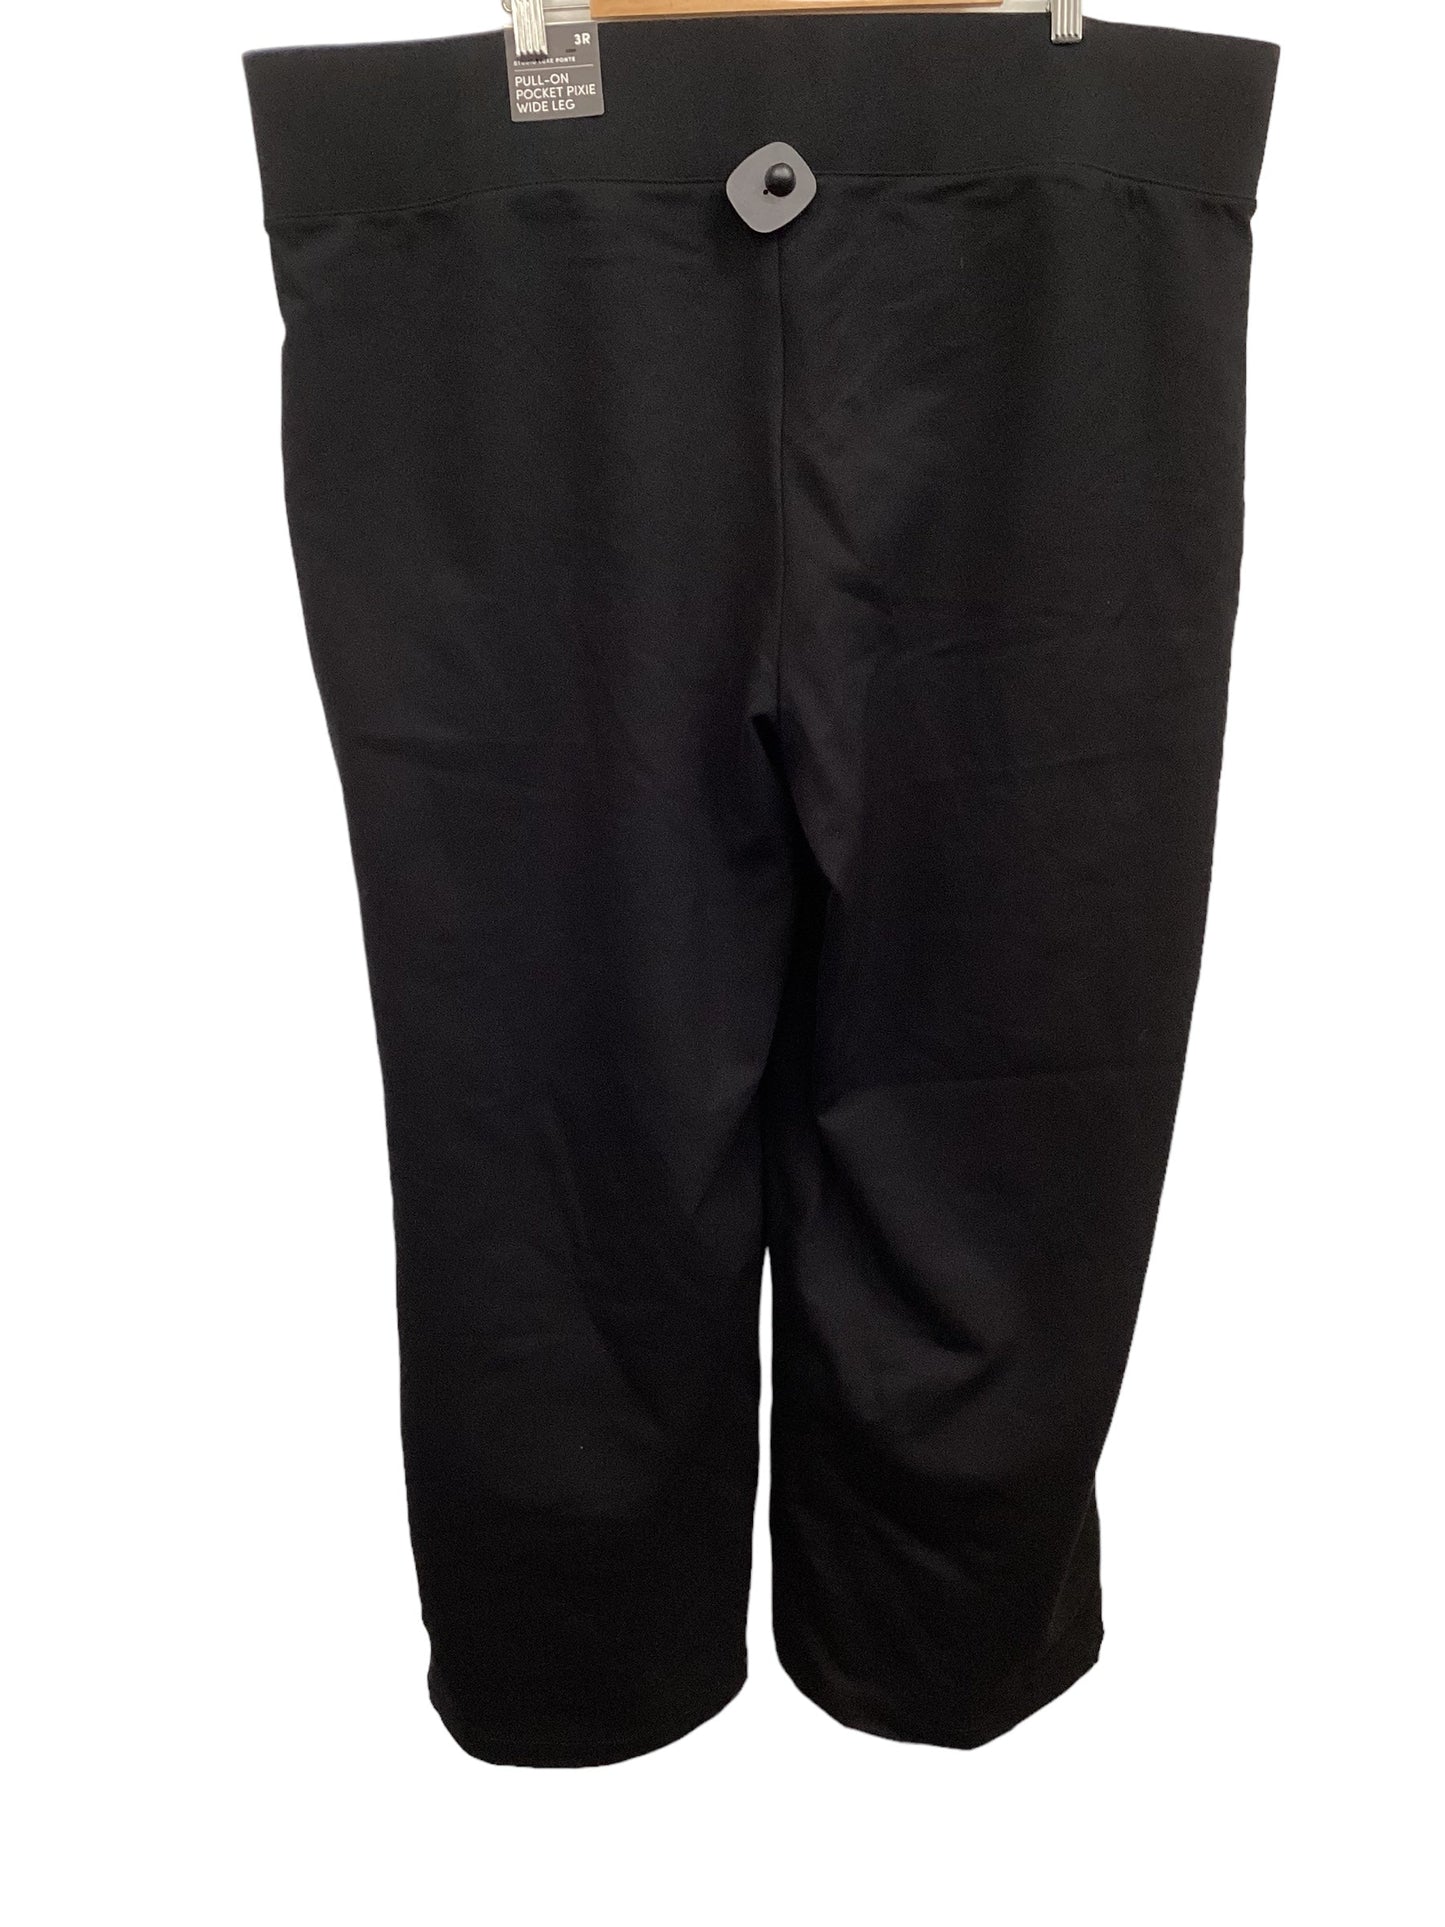 Black Pants Other Torrid, Size 3